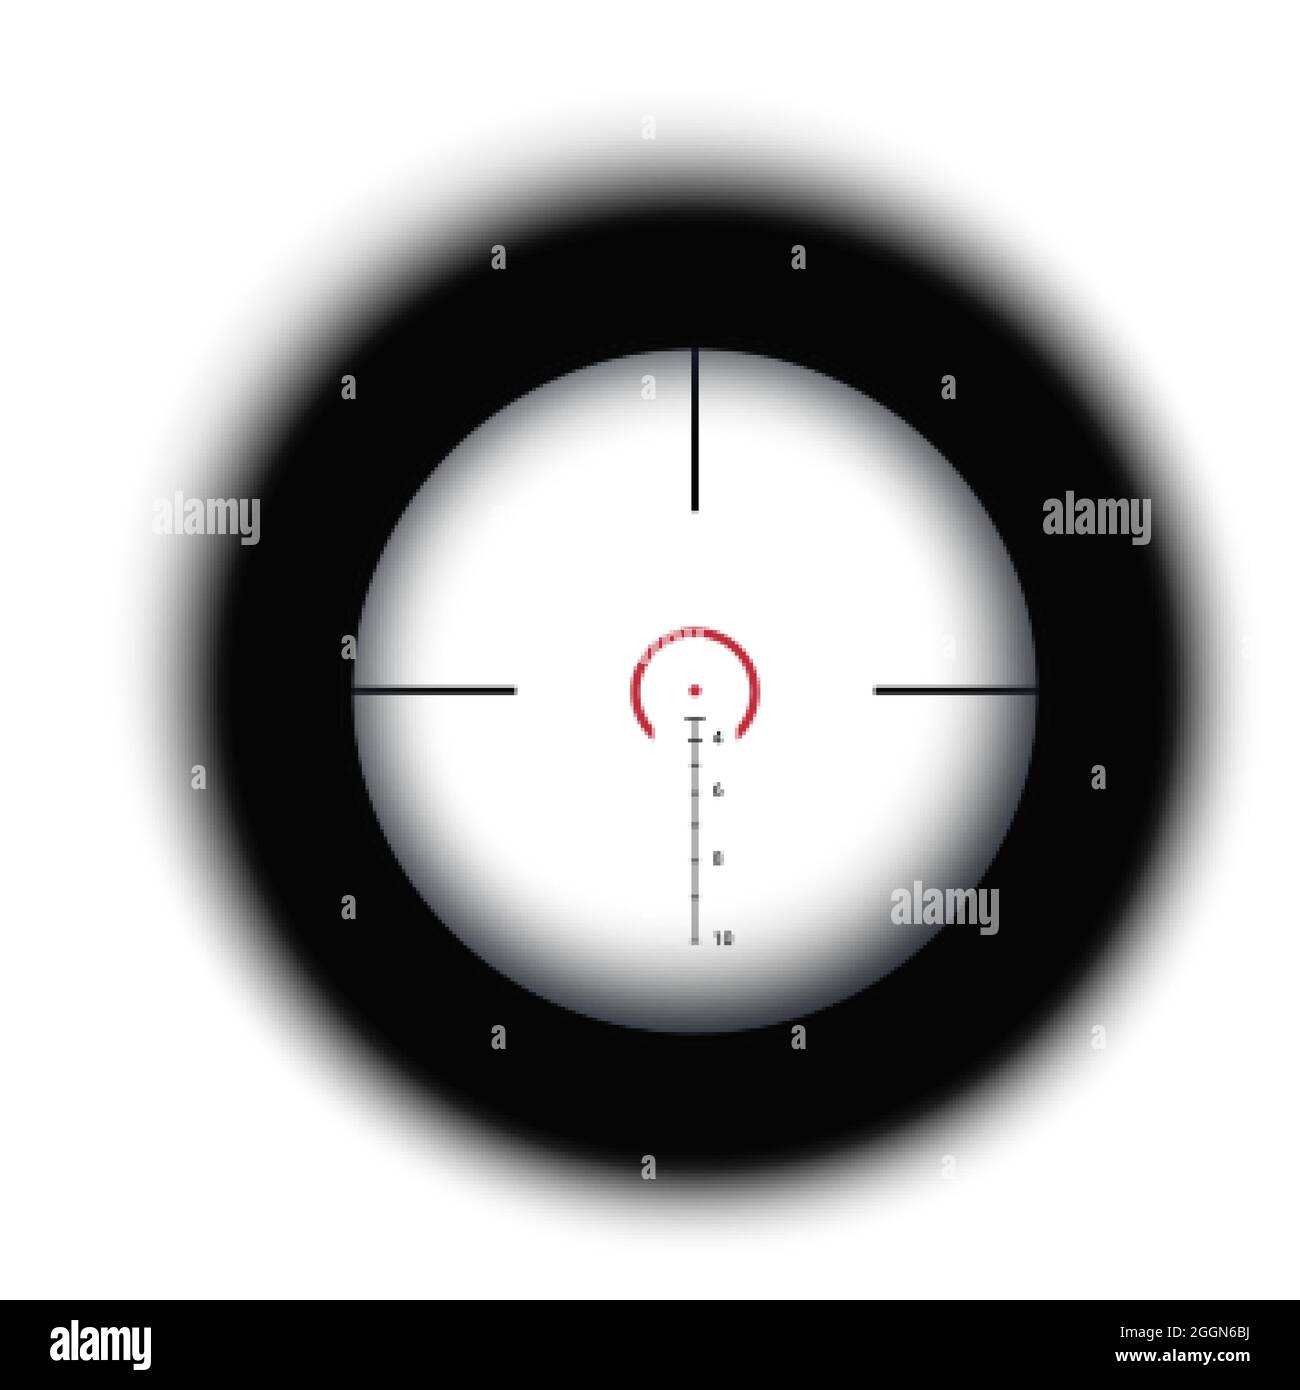 Crosshair of sniper scope viewfinder. Aiming cross of a gun optics. Stock Vector